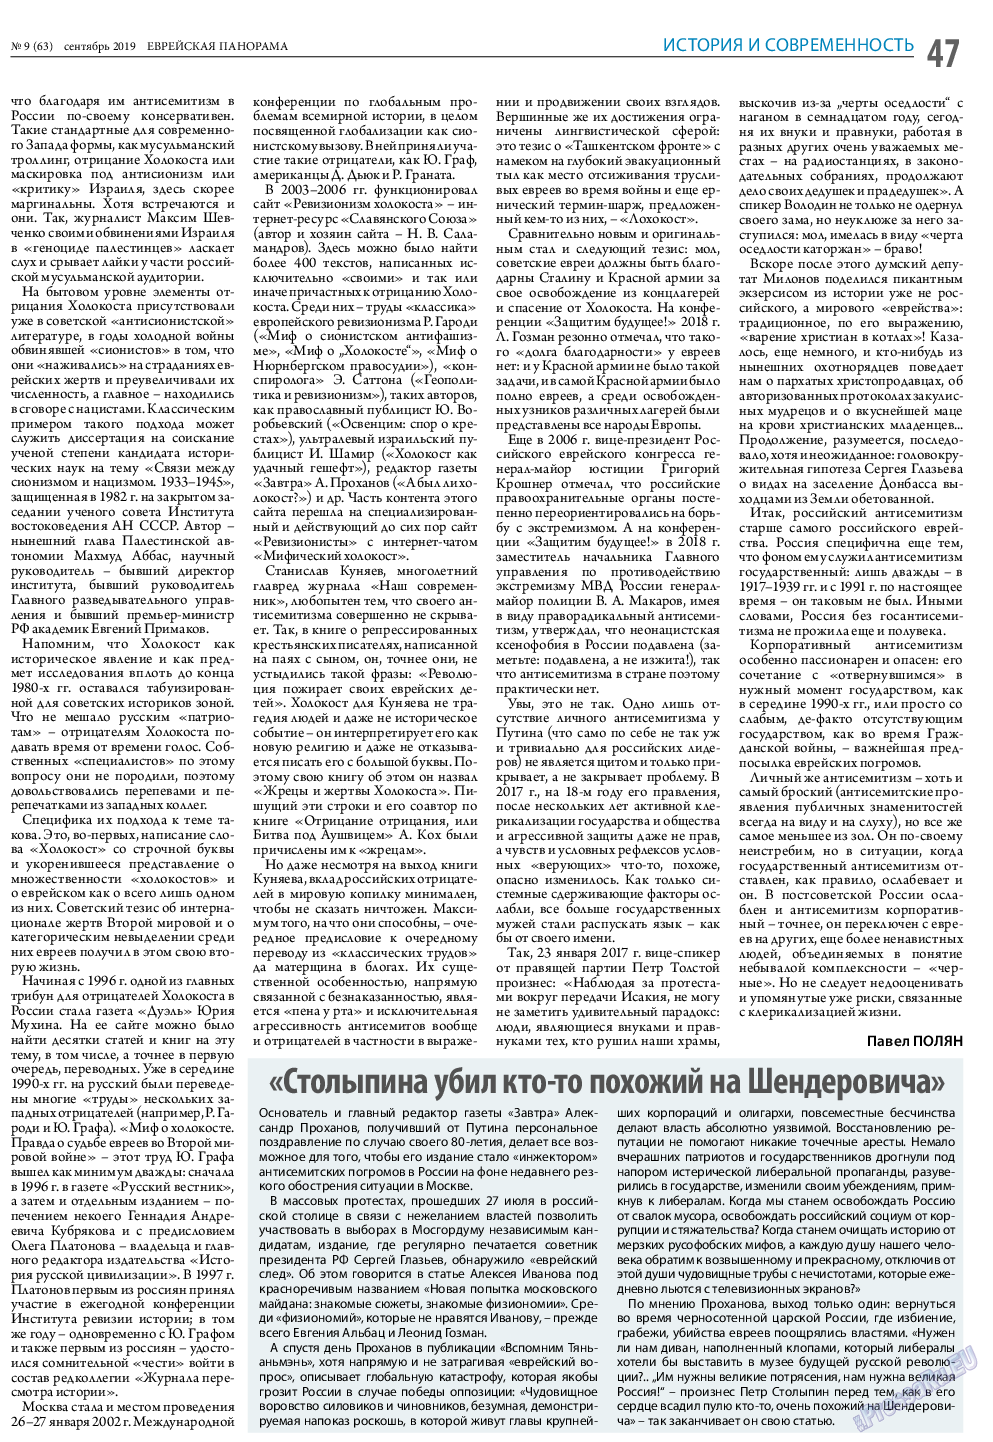 Еврейская панорама, газета. 2019 №9 стр.47